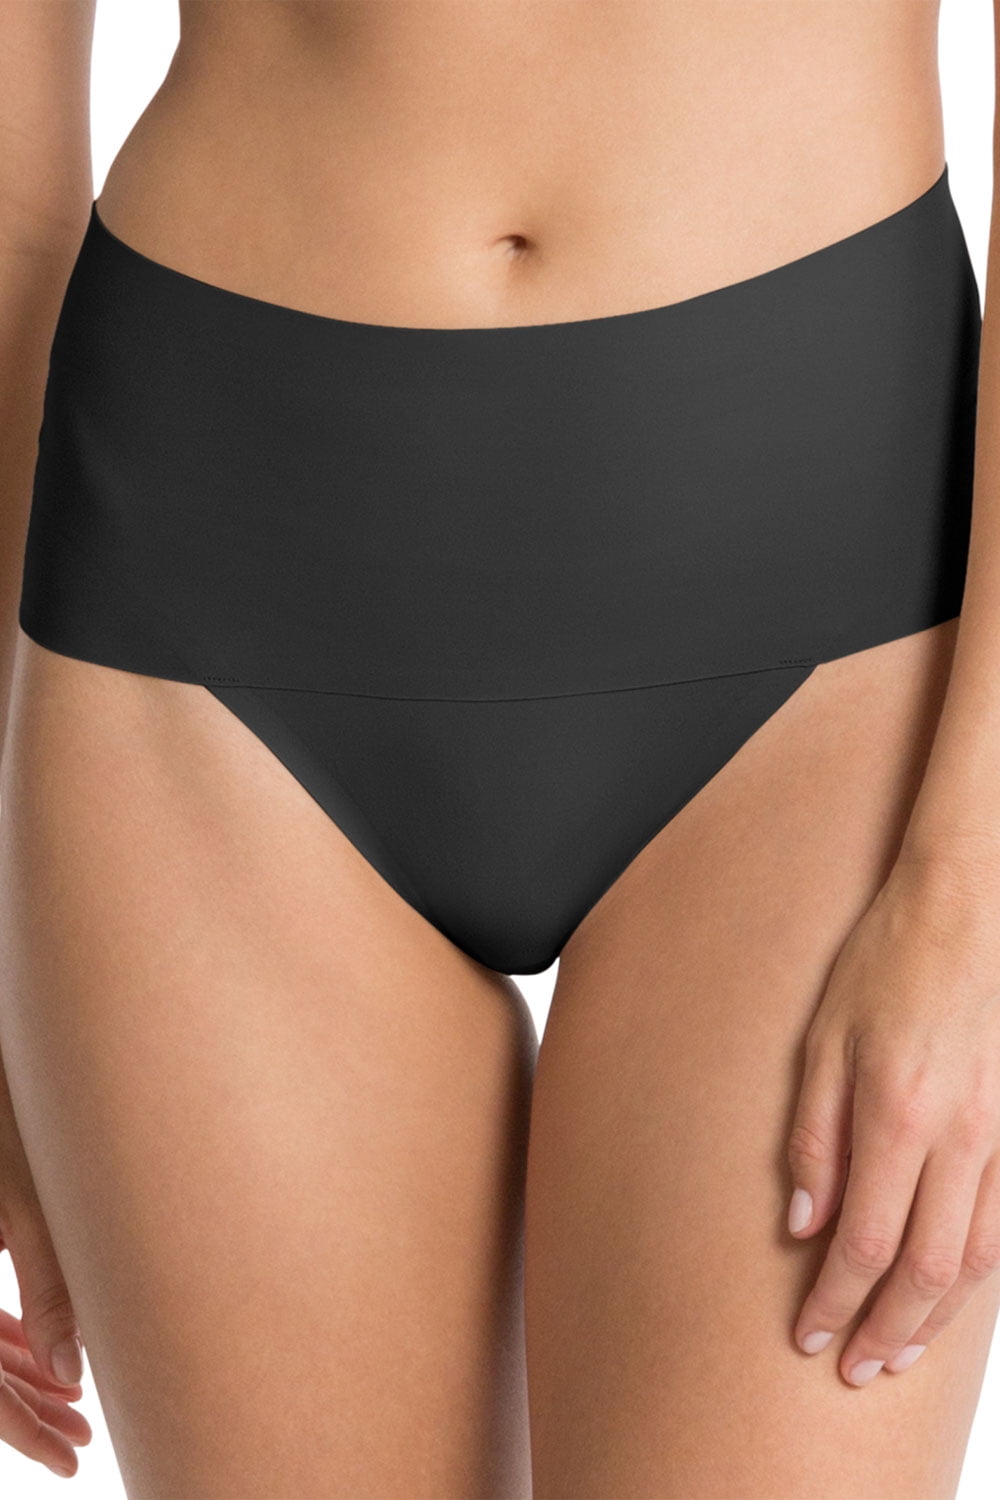 SPANX Undie-Tectable Thong Panty Women's Shapewear Underwear, Black,Medium